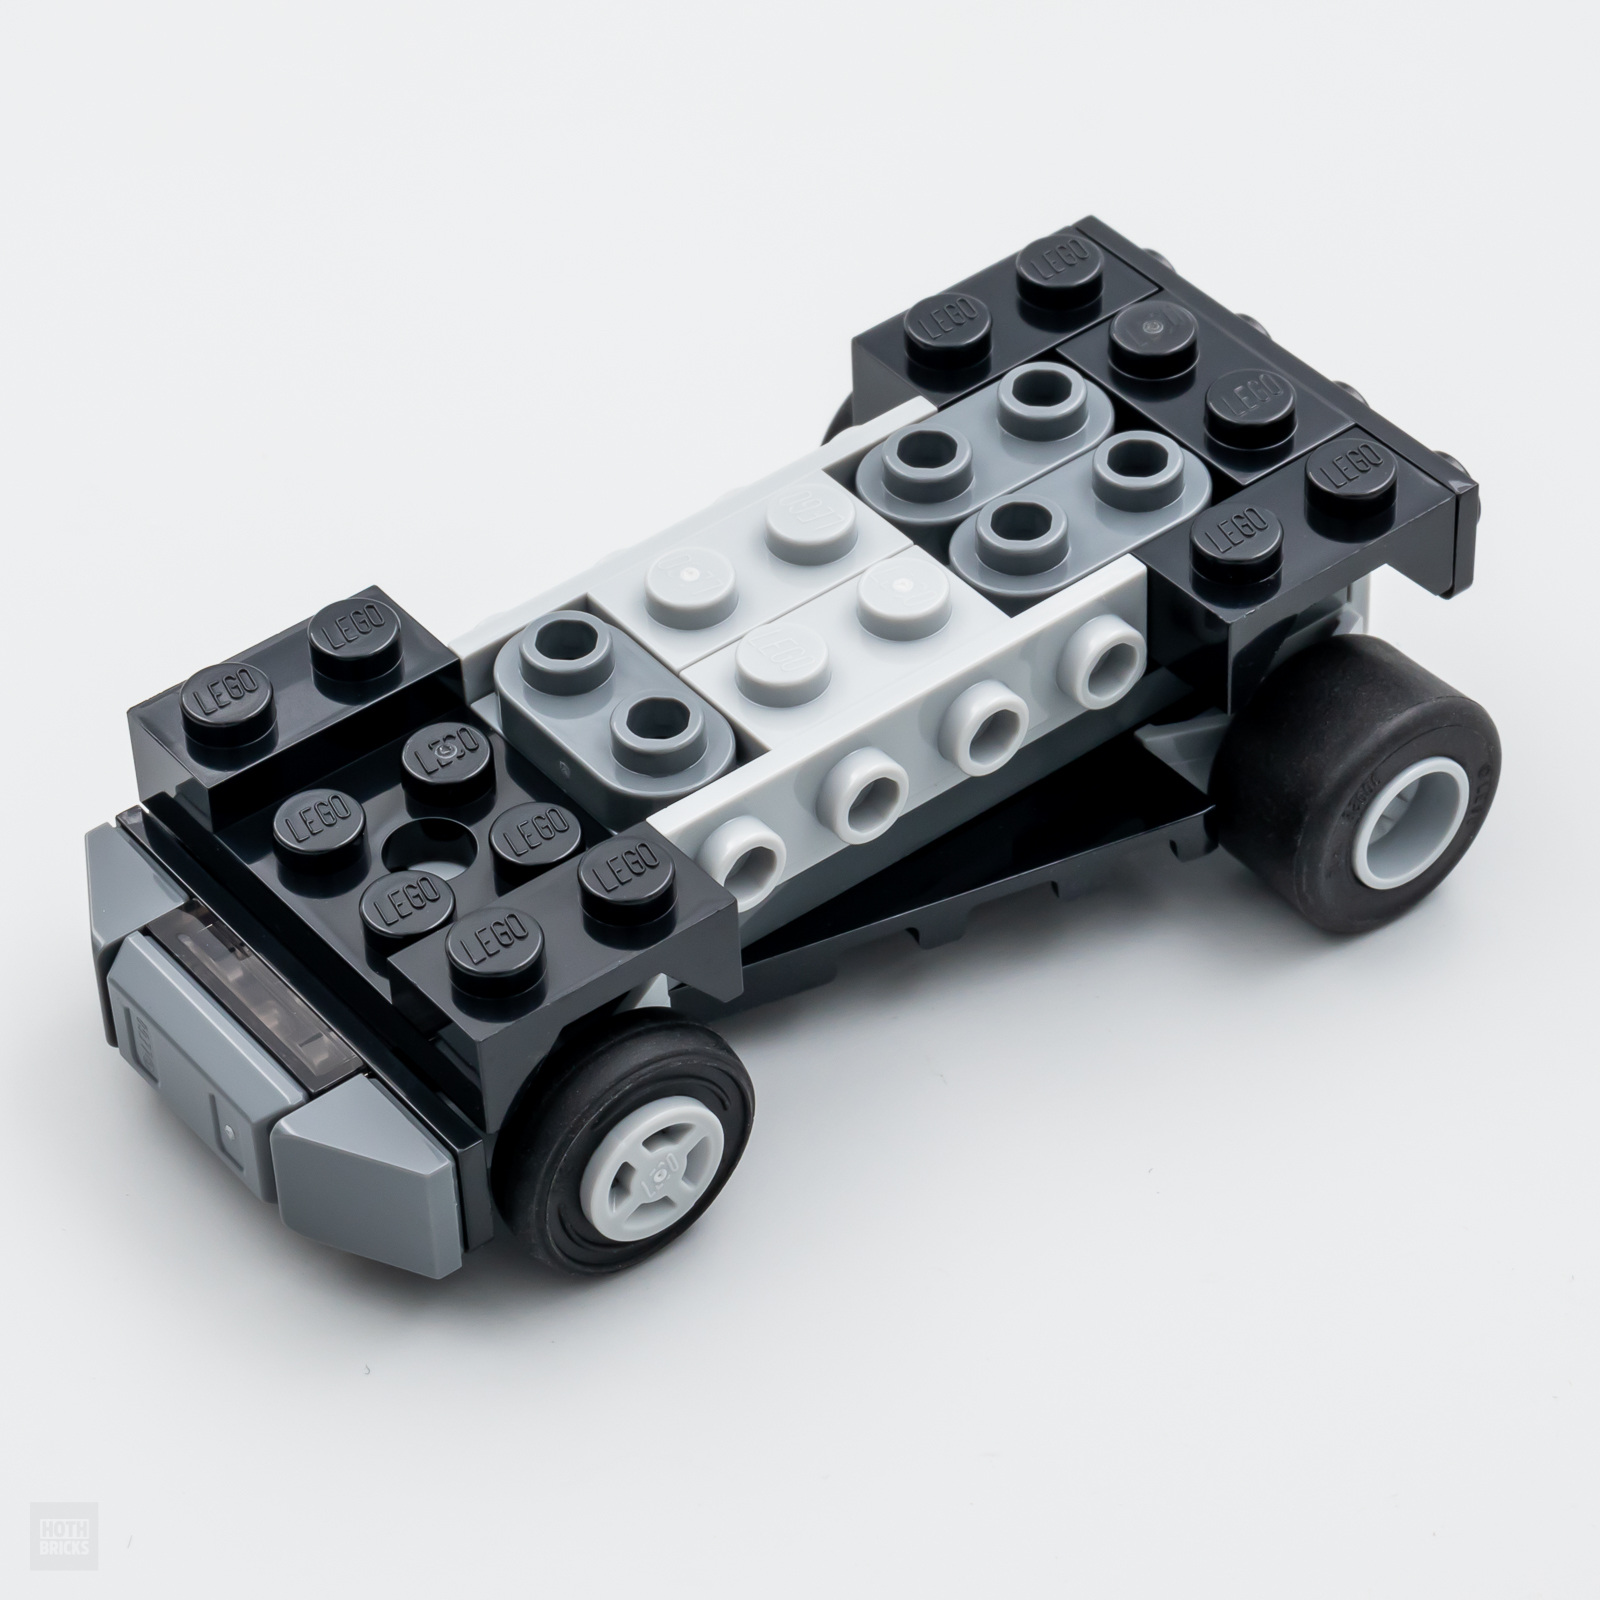 Lego 2022 The Batman Batmobile 30455 Poly Bag Complete Set Factory Sealed